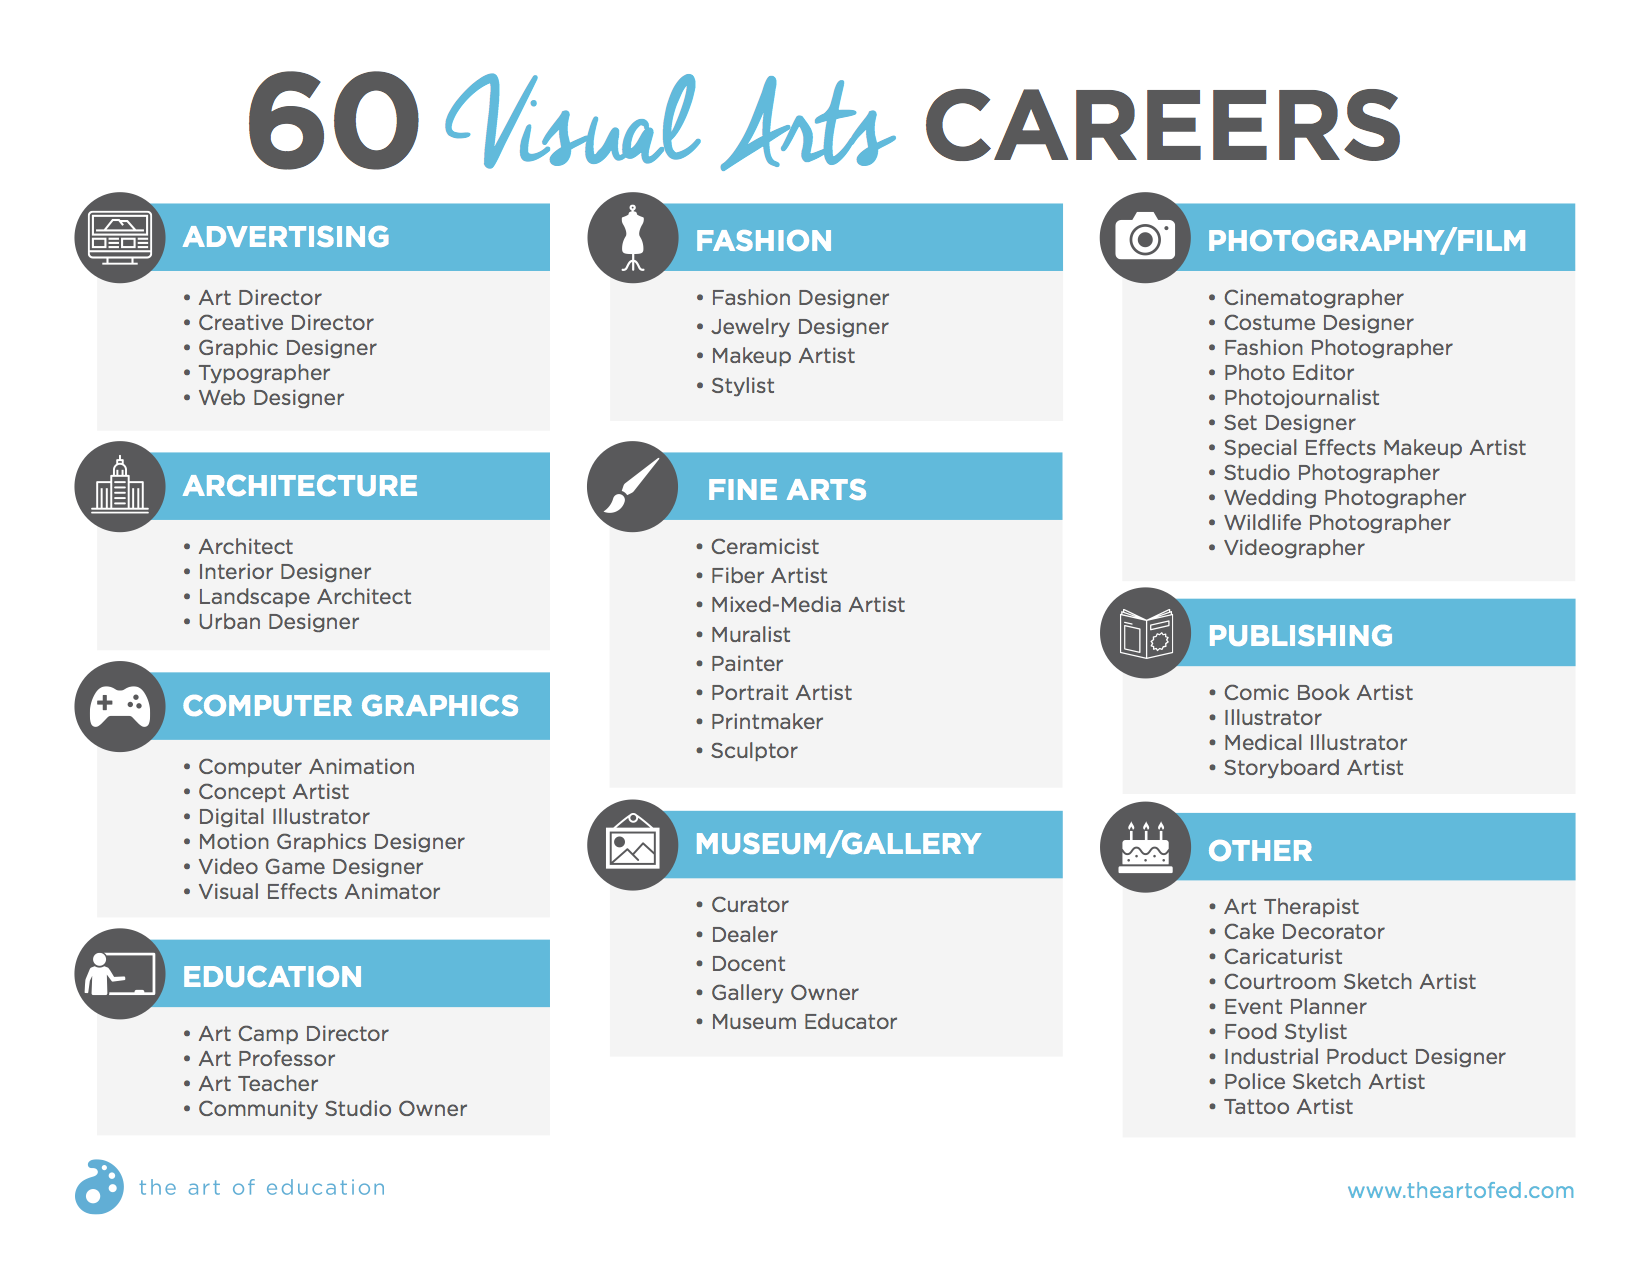 University of the arts jobs website